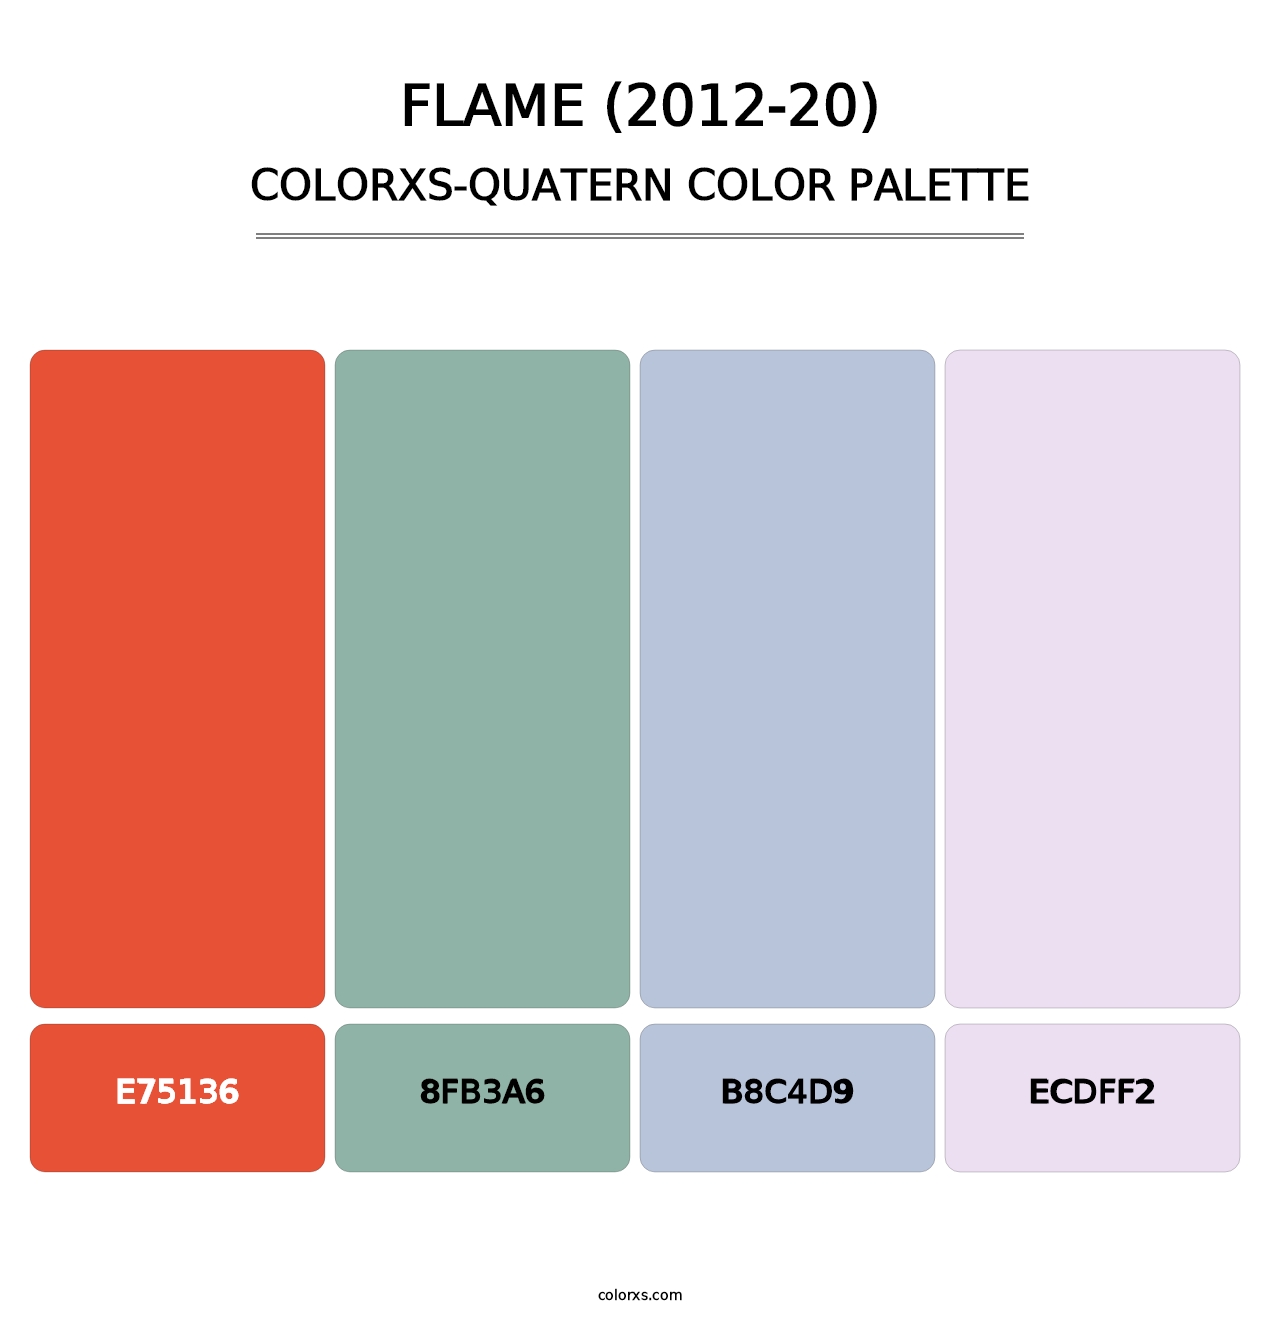 Flame (2012-20) - Colorxs Quatern Palette